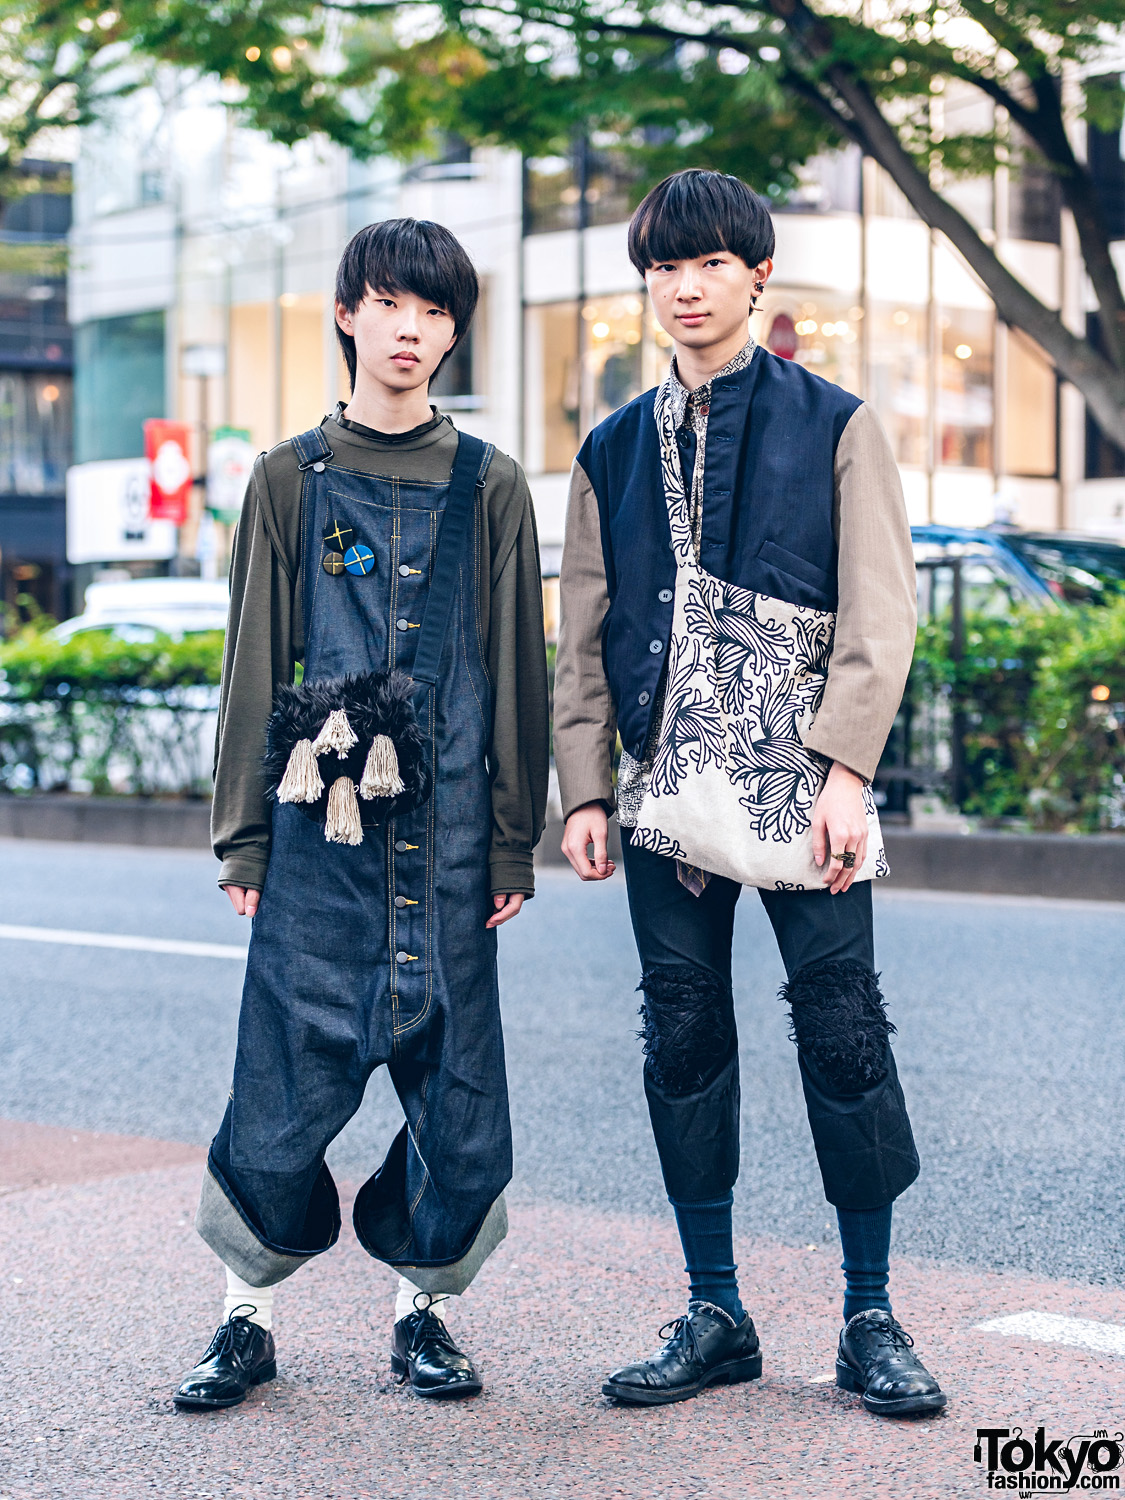 Christopher Nemeth Tokyo Streetwear Styles w/ Rope Print Bag